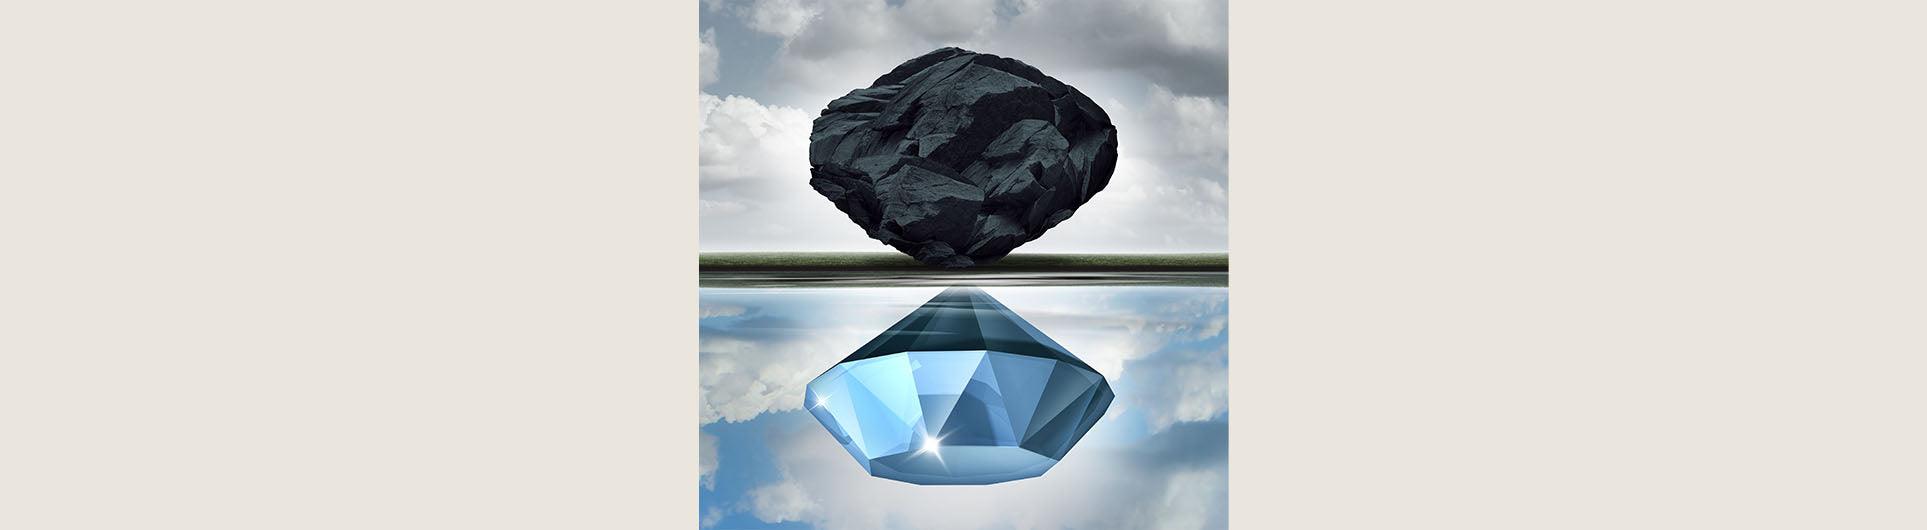 Does coal turn into diamond